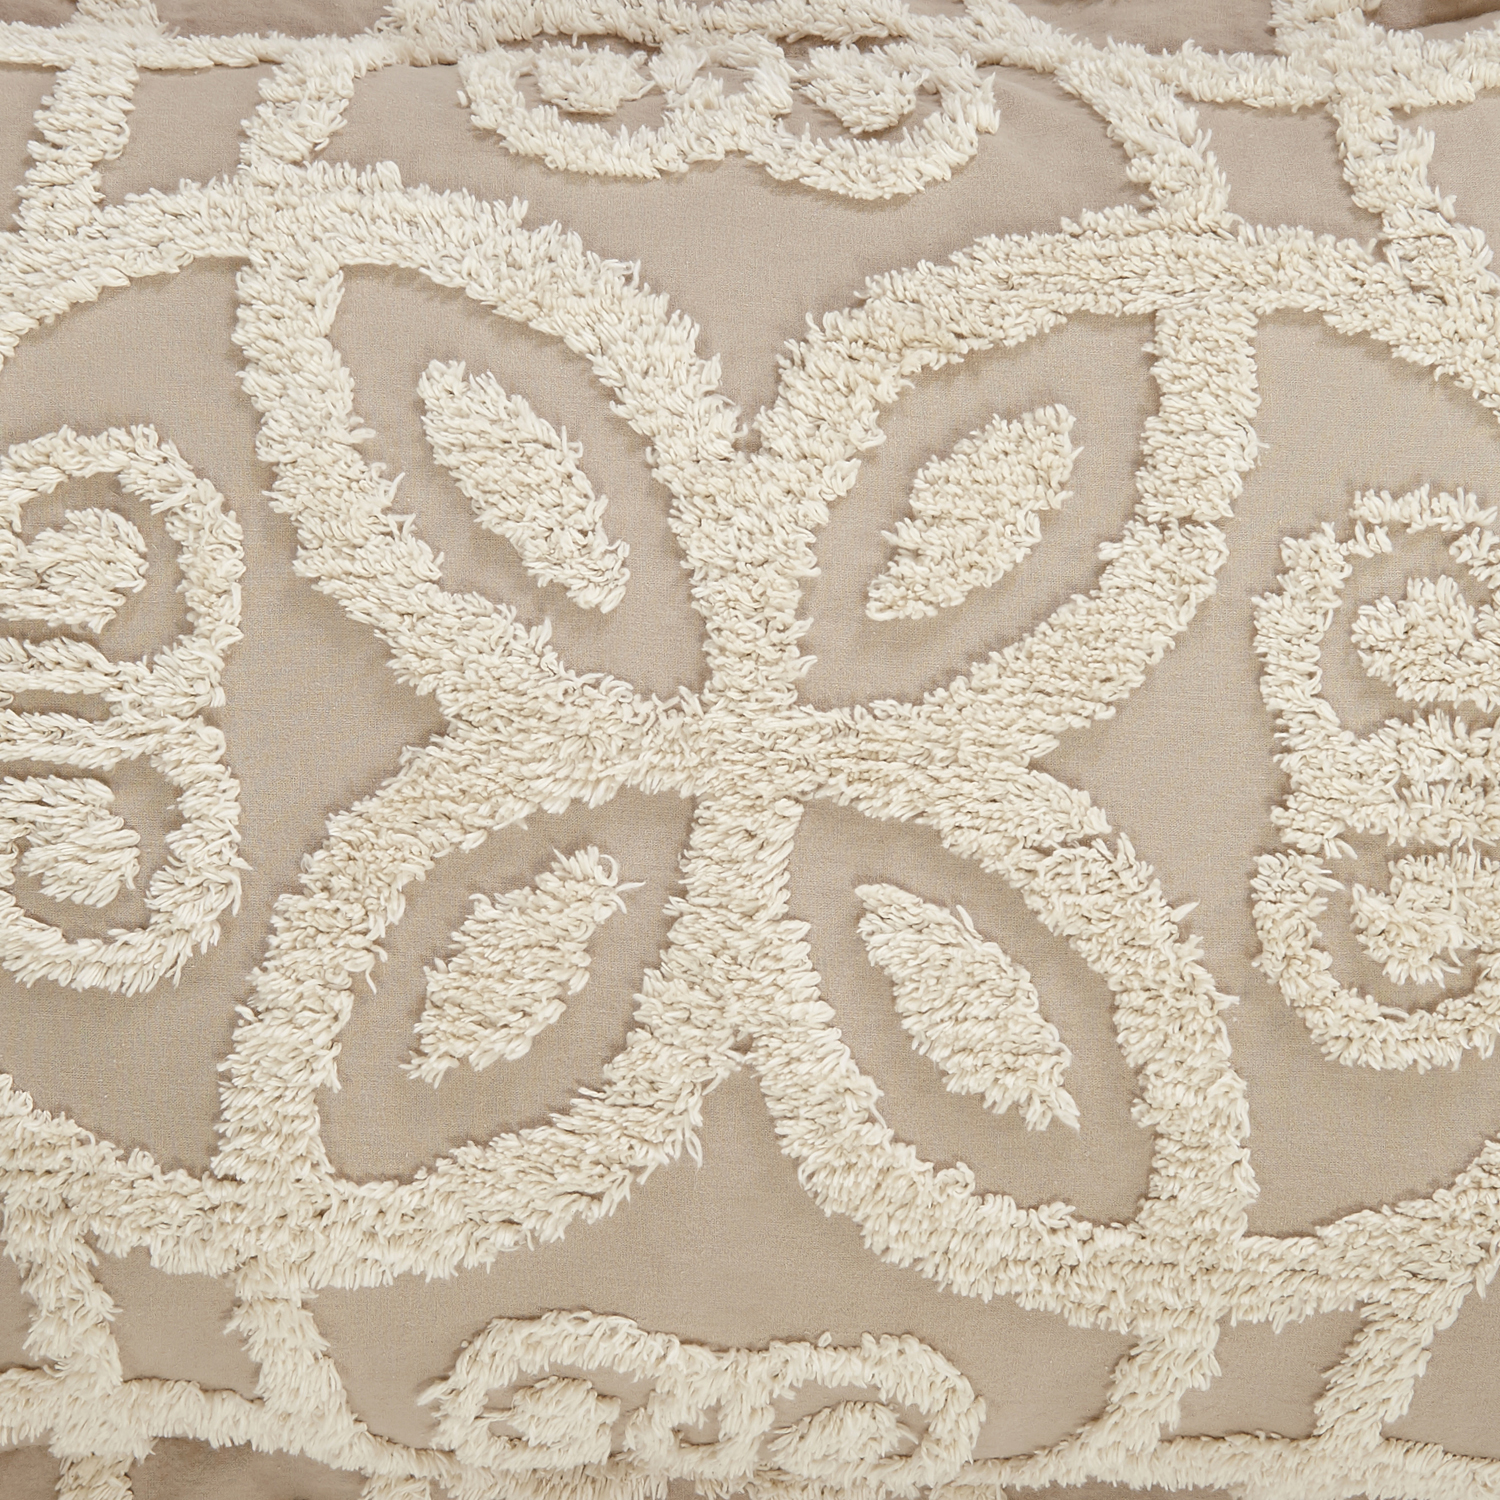 Better Trends Eden Comforter Floral 100% Cotton, Full/Queen, for Adult, Linen/Ivory - image 3 of 4